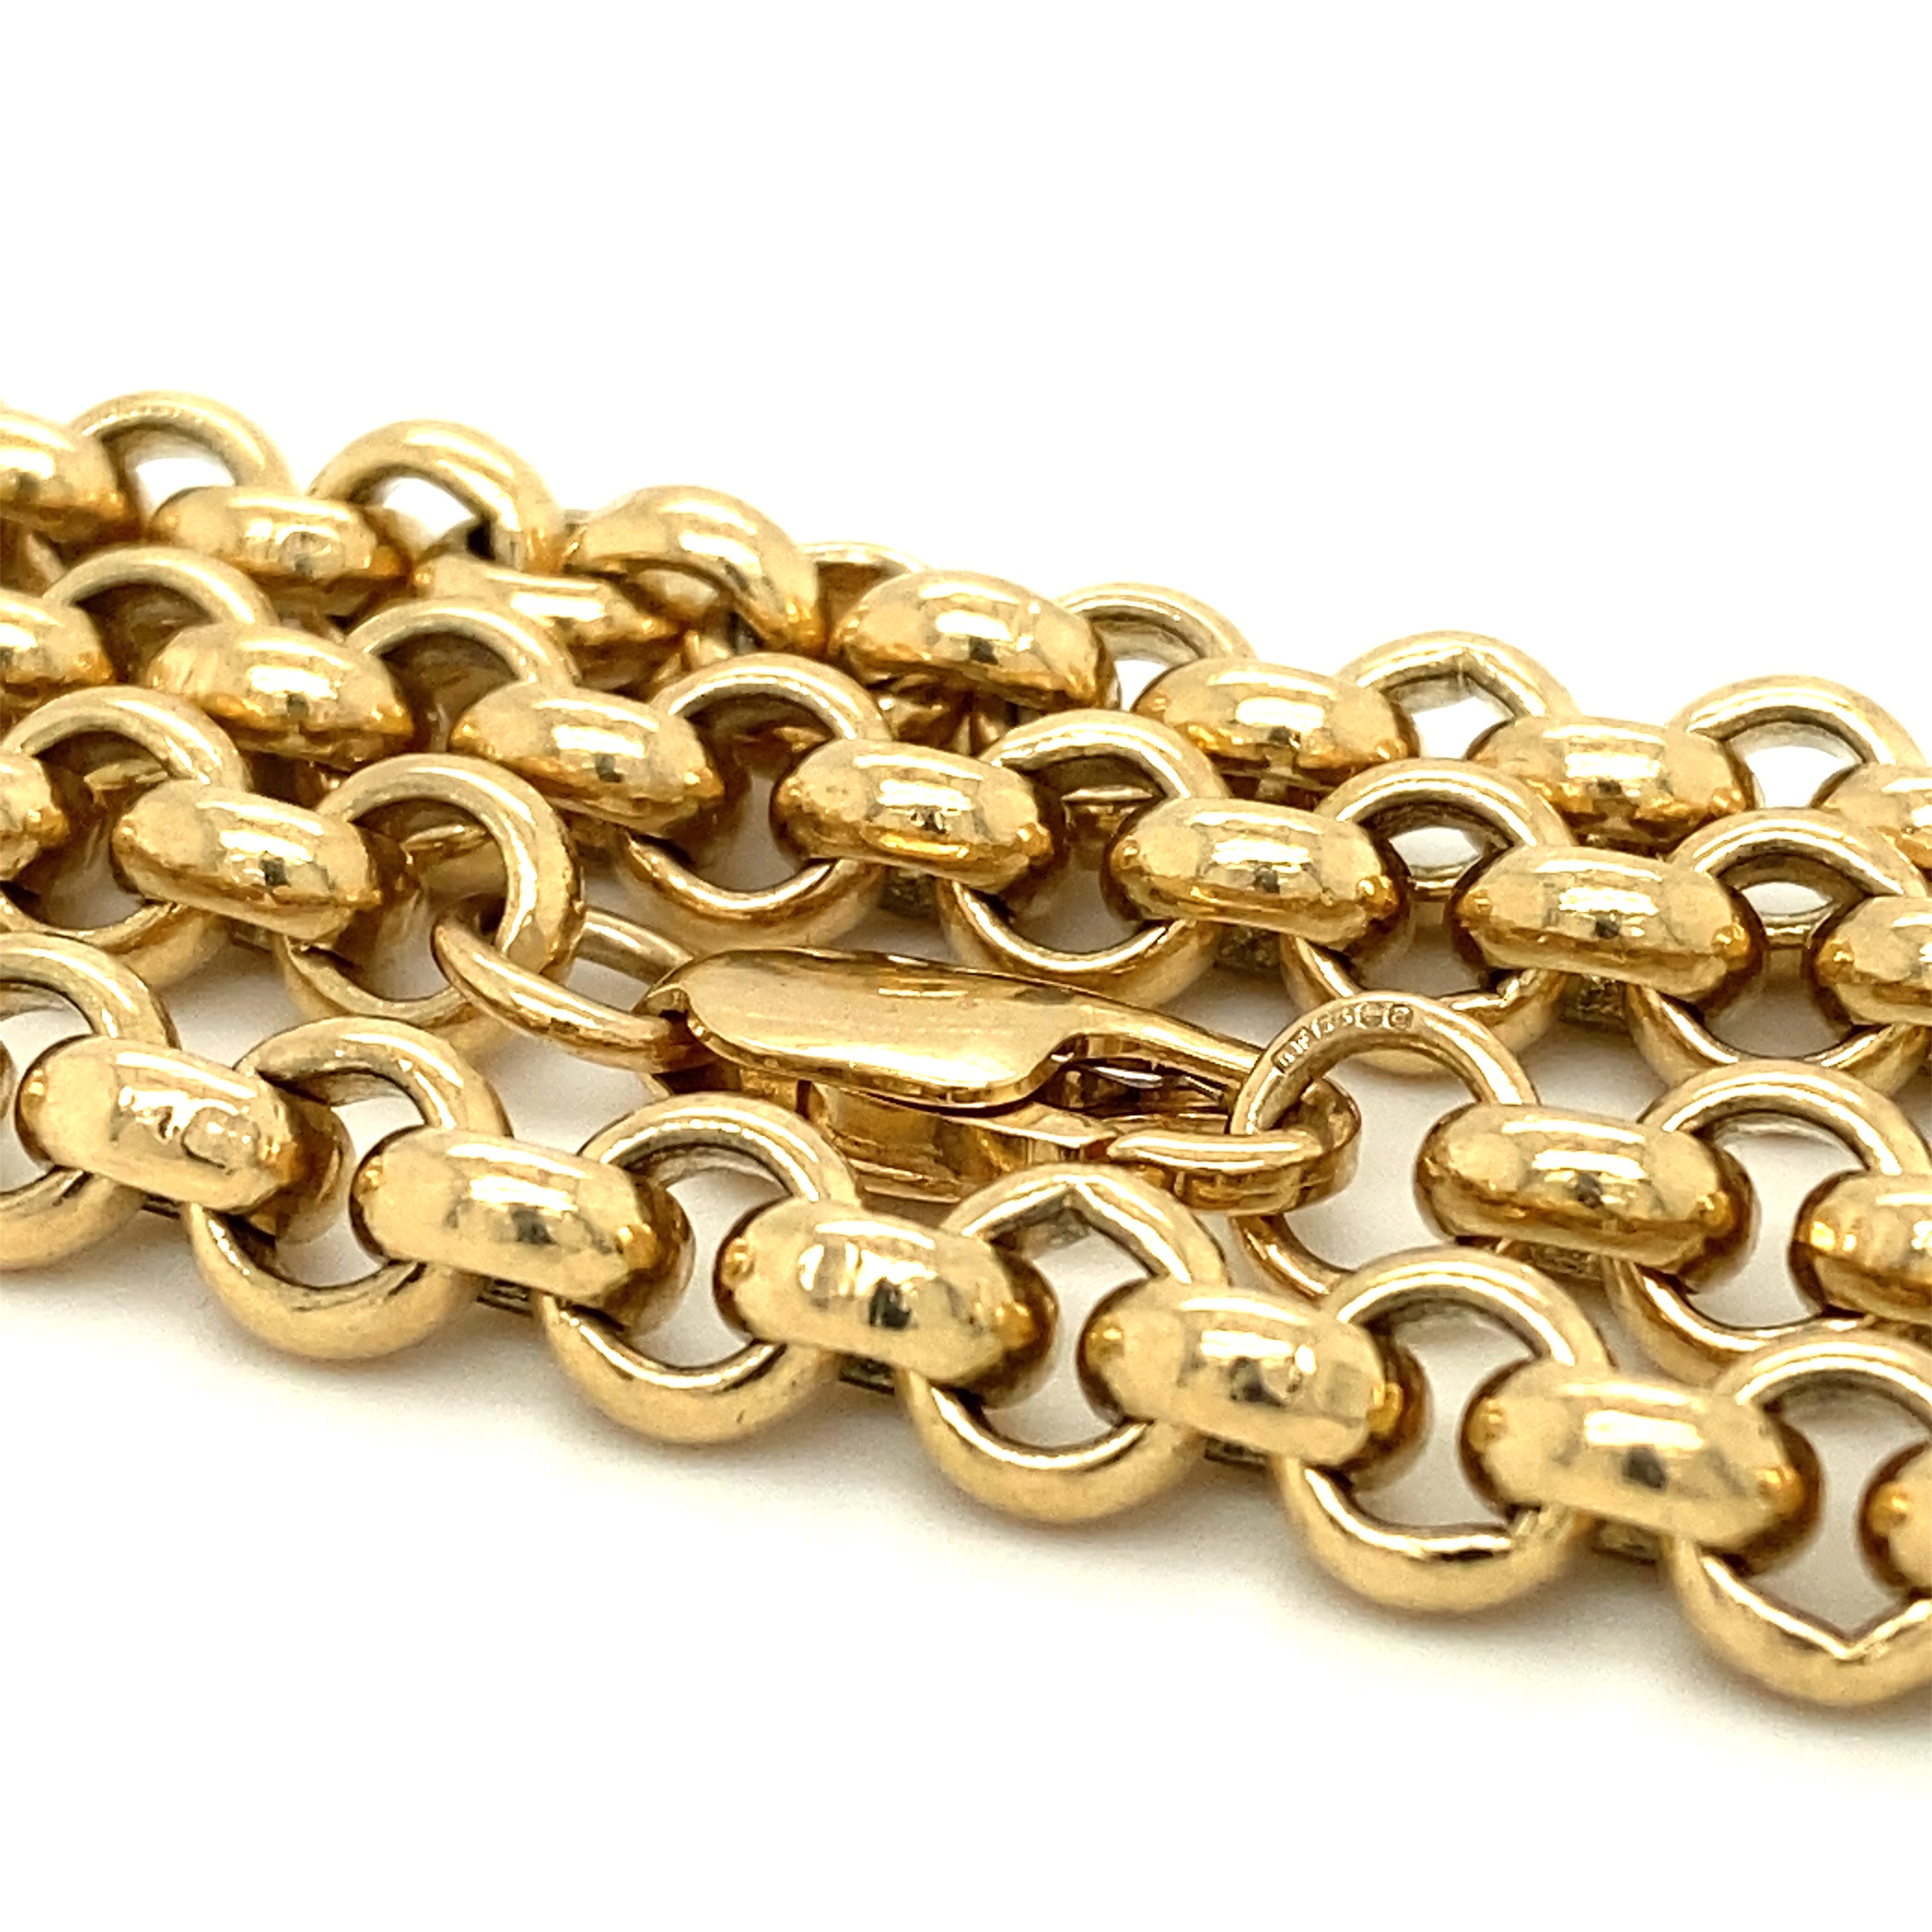 9ct Gold Belcher Link Chain Necklace, 95.8g - Wildsmith Jewellery Necklaces